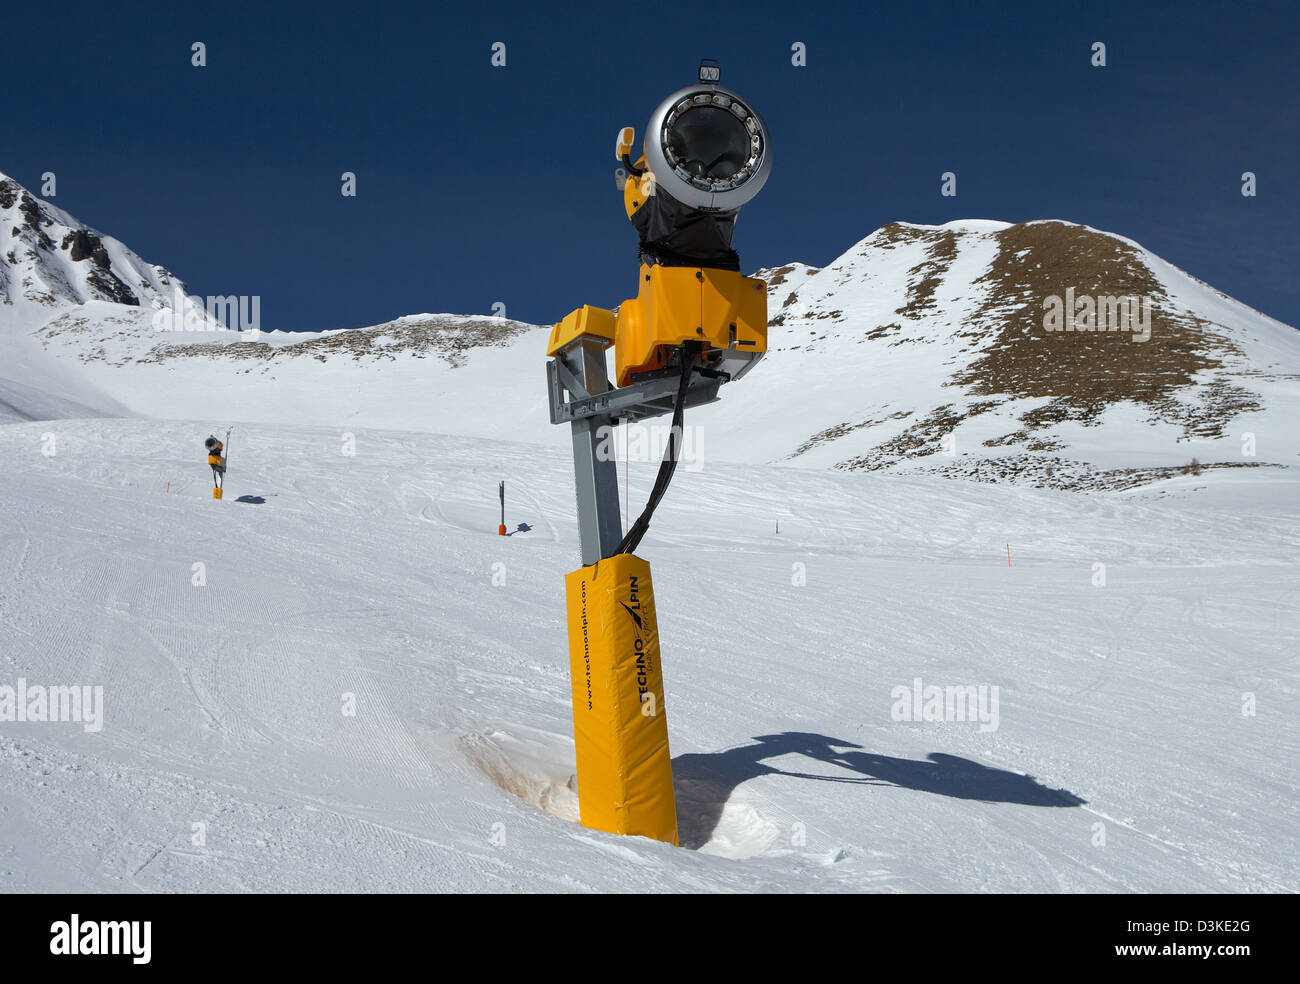 23,220 Snow Gun Images, Stock Photos, 3D objects, & Vectors